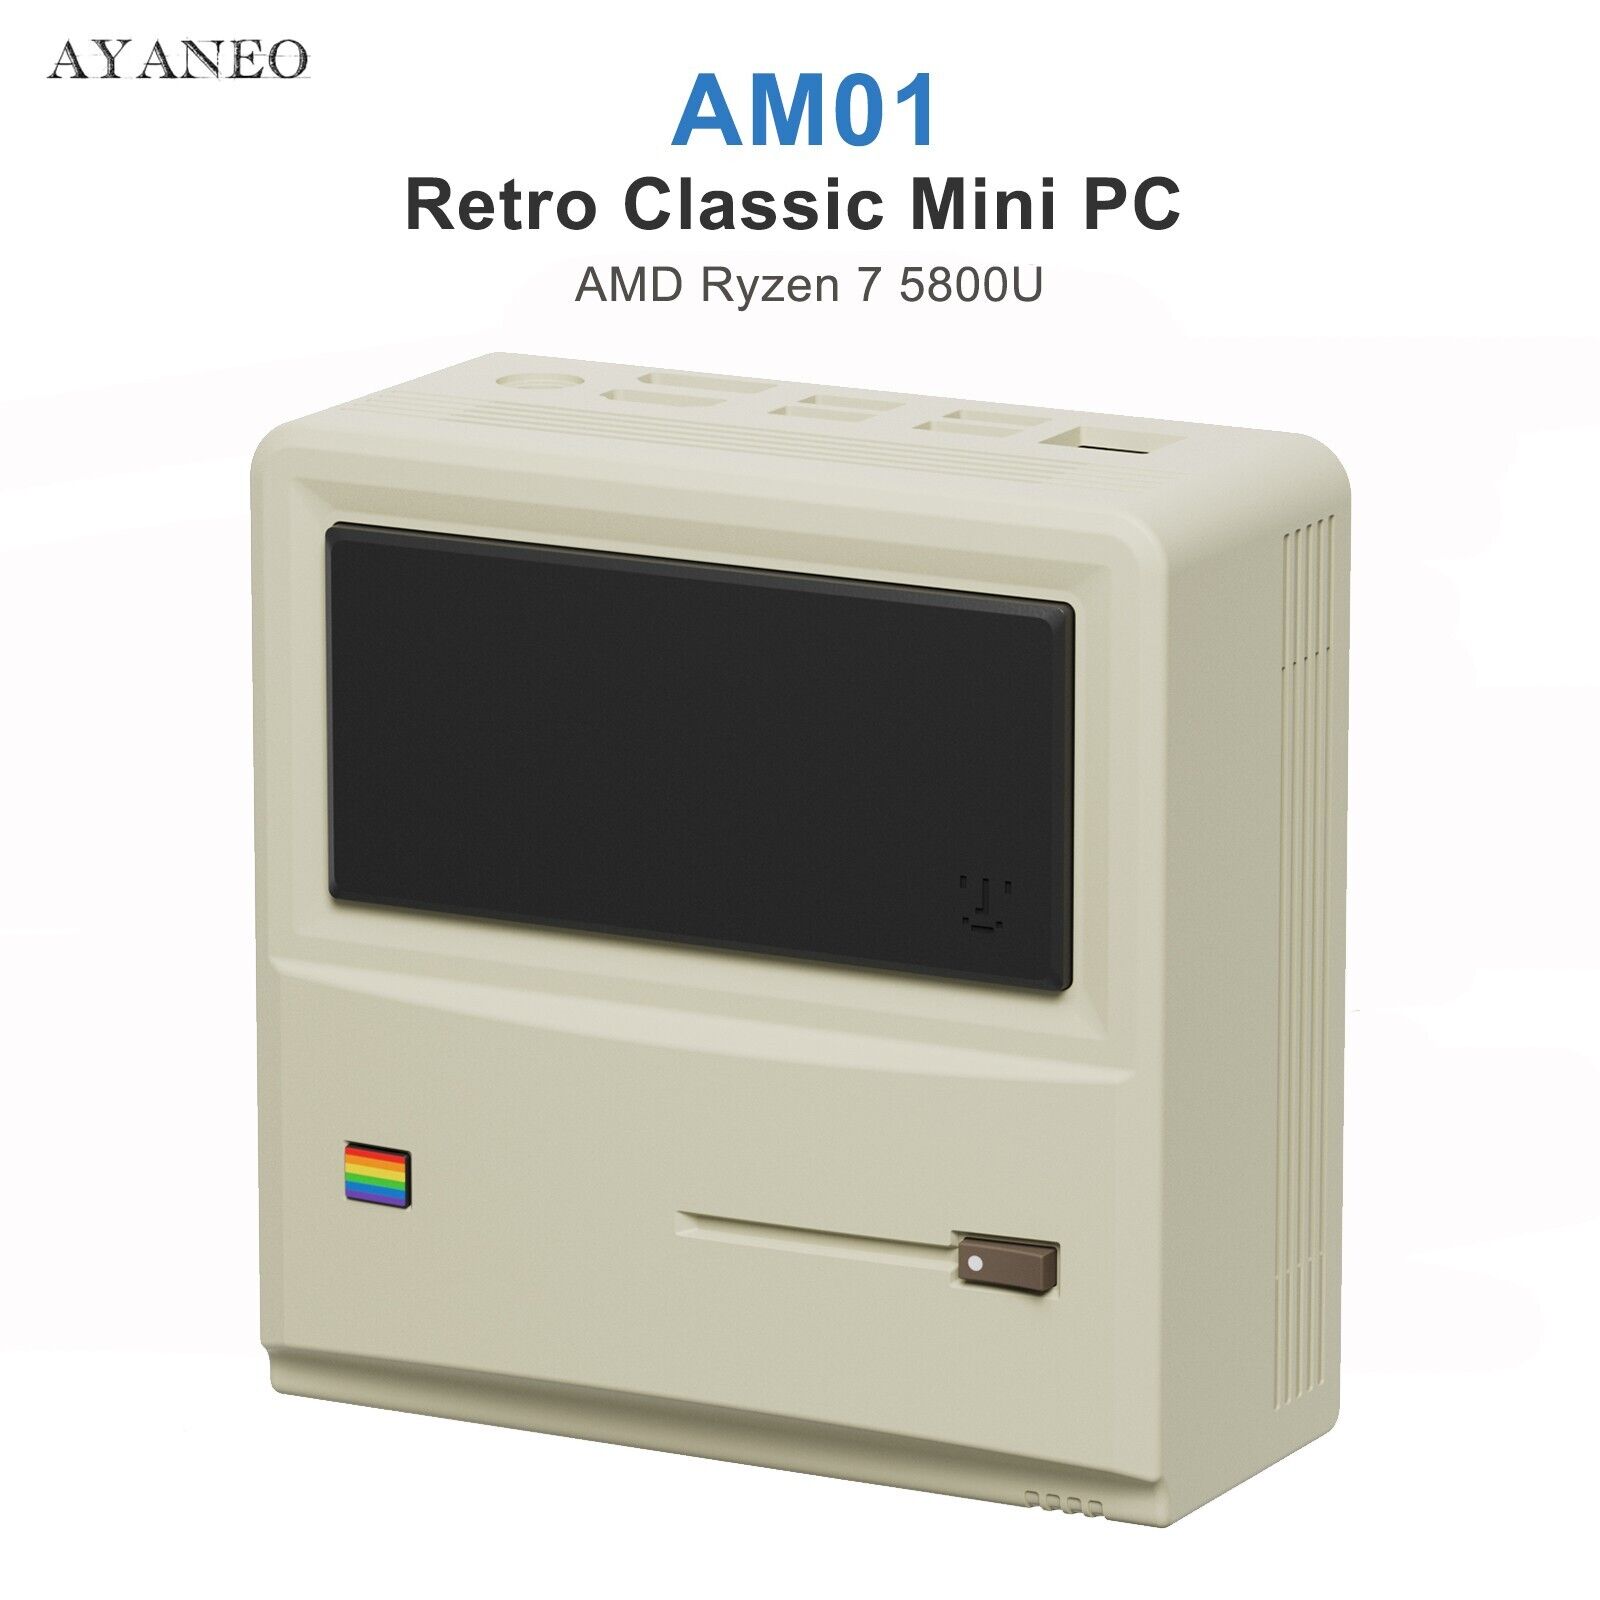 AYANEO AM01 AMD Ryzen 7 5800U Gaming Mini PC Home Retro Classic DP DDR4 32GB 1TB